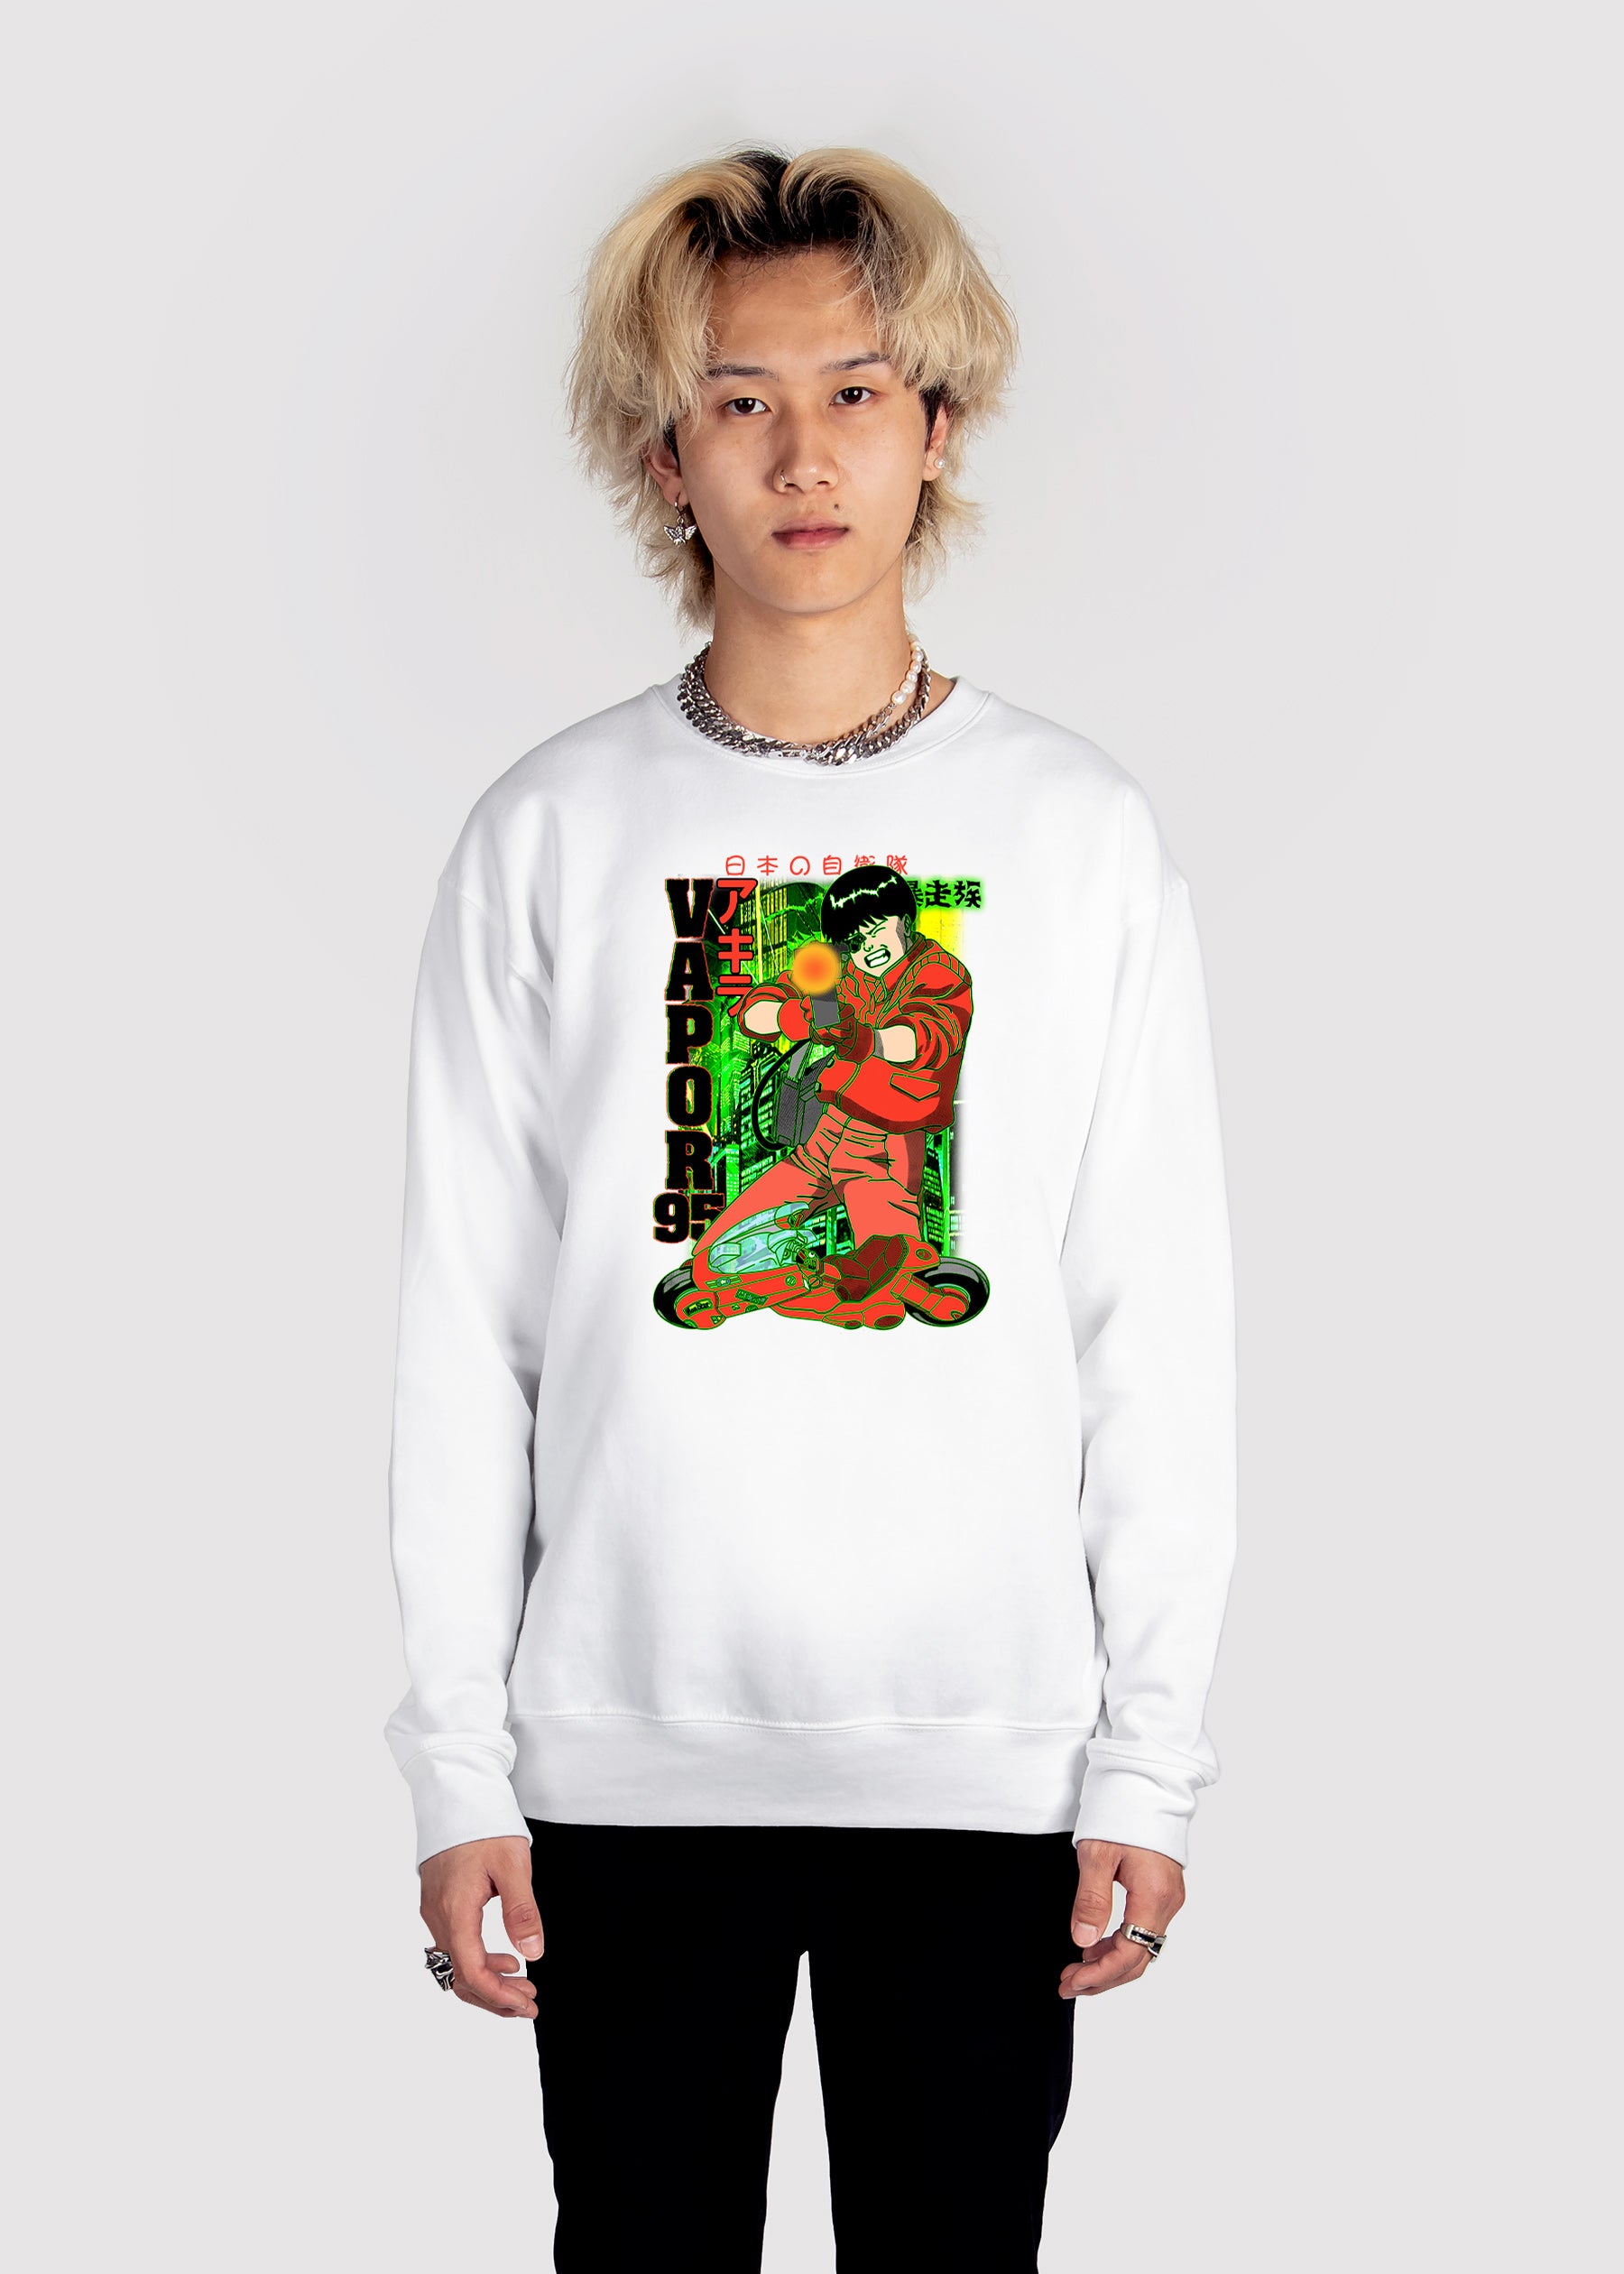 Kaneda's Revenge Sweatshirt